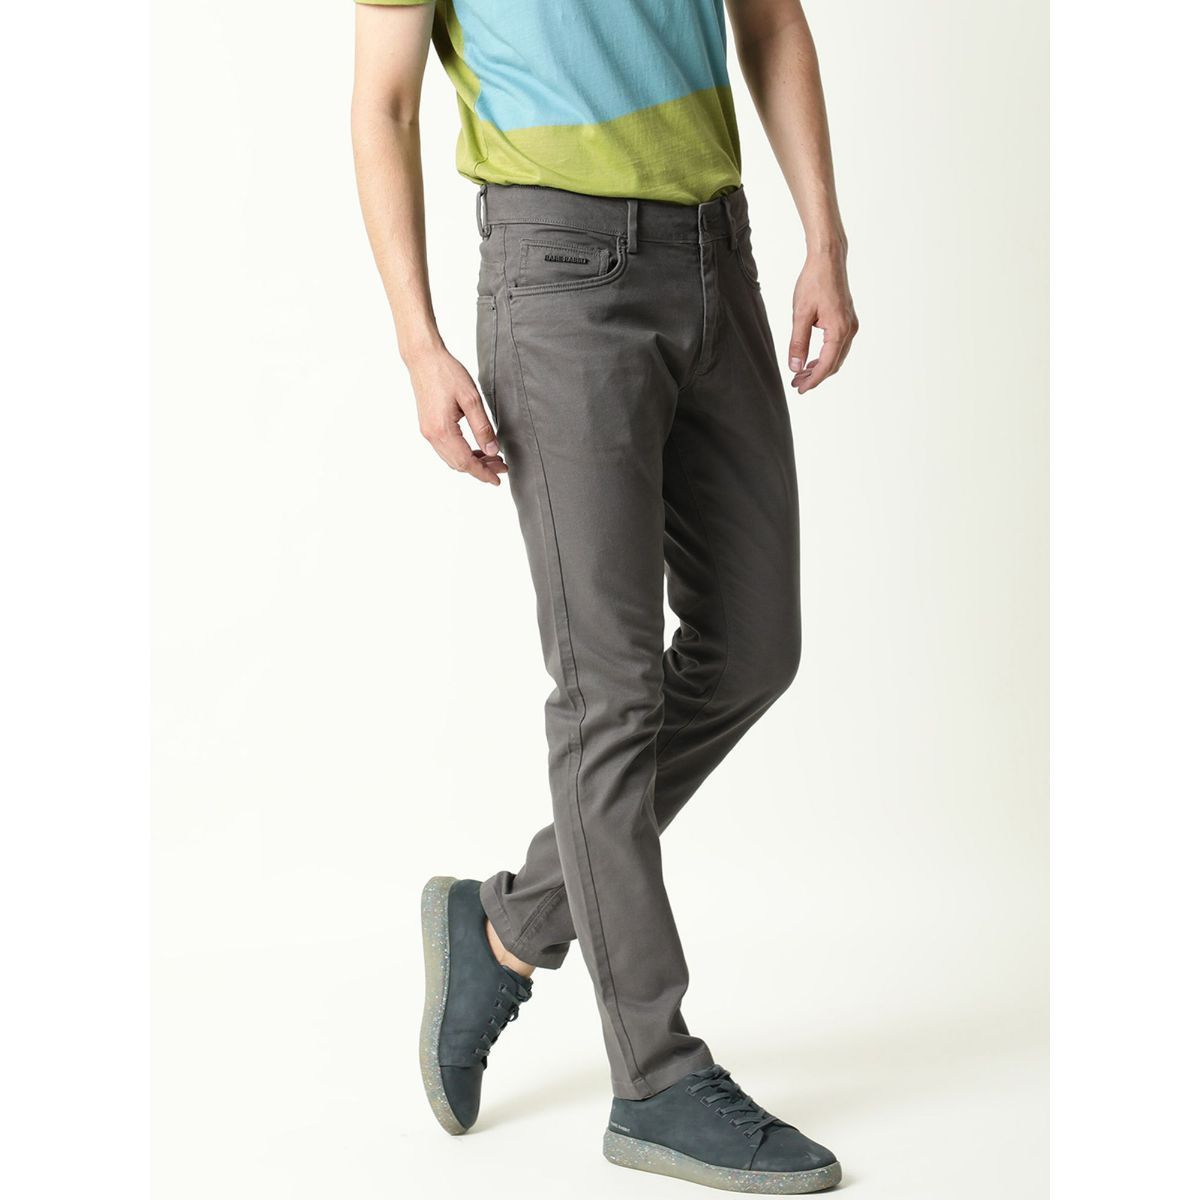 Buy Beige Trousers & Pants for Men by Rare Rabbit Online | Ajio.com